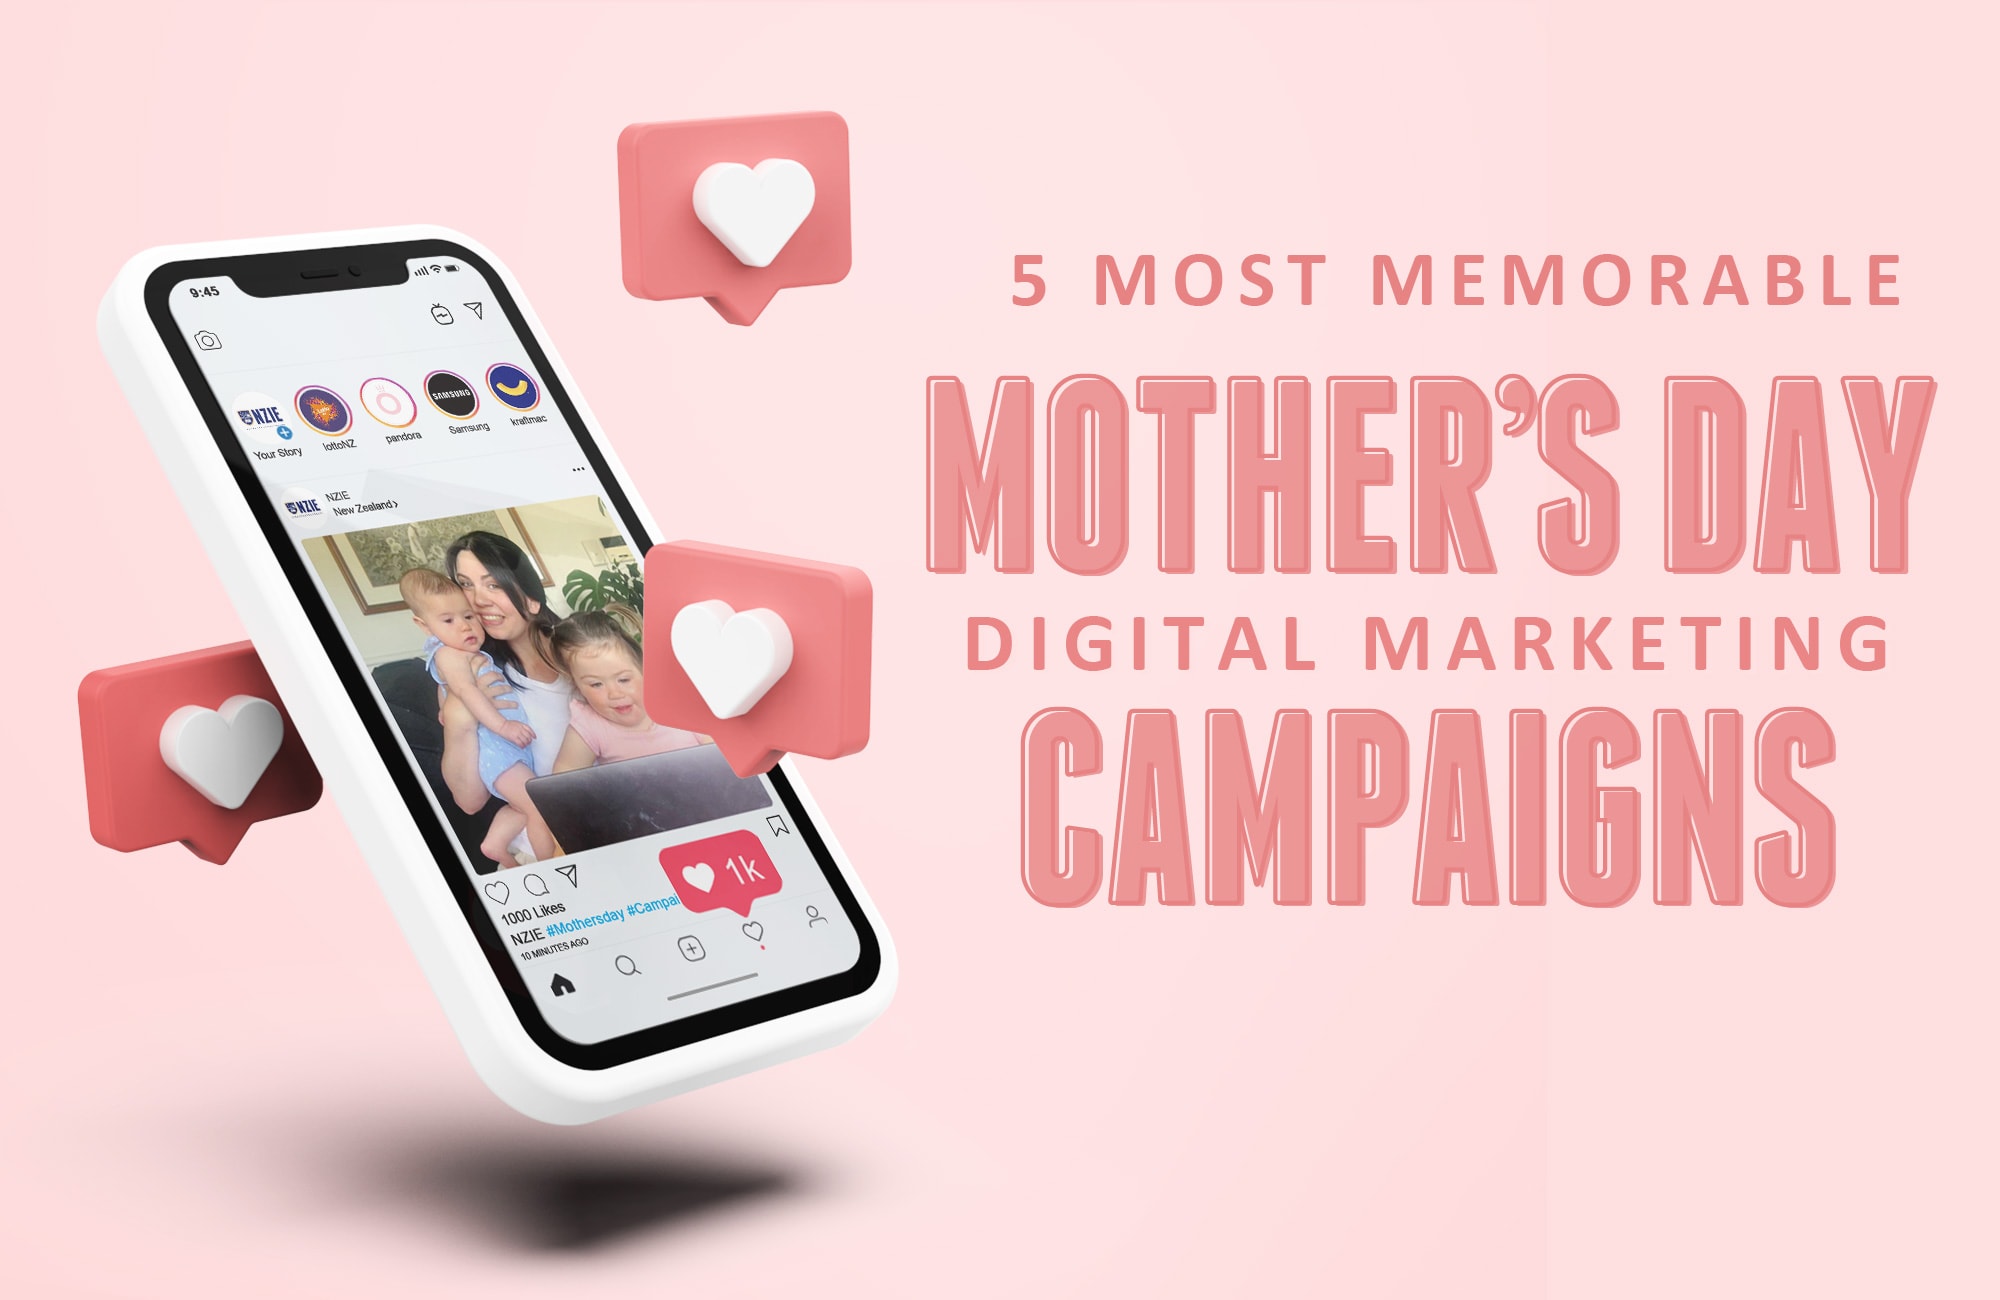 - 5 Most Memorable Day Digital Marketing